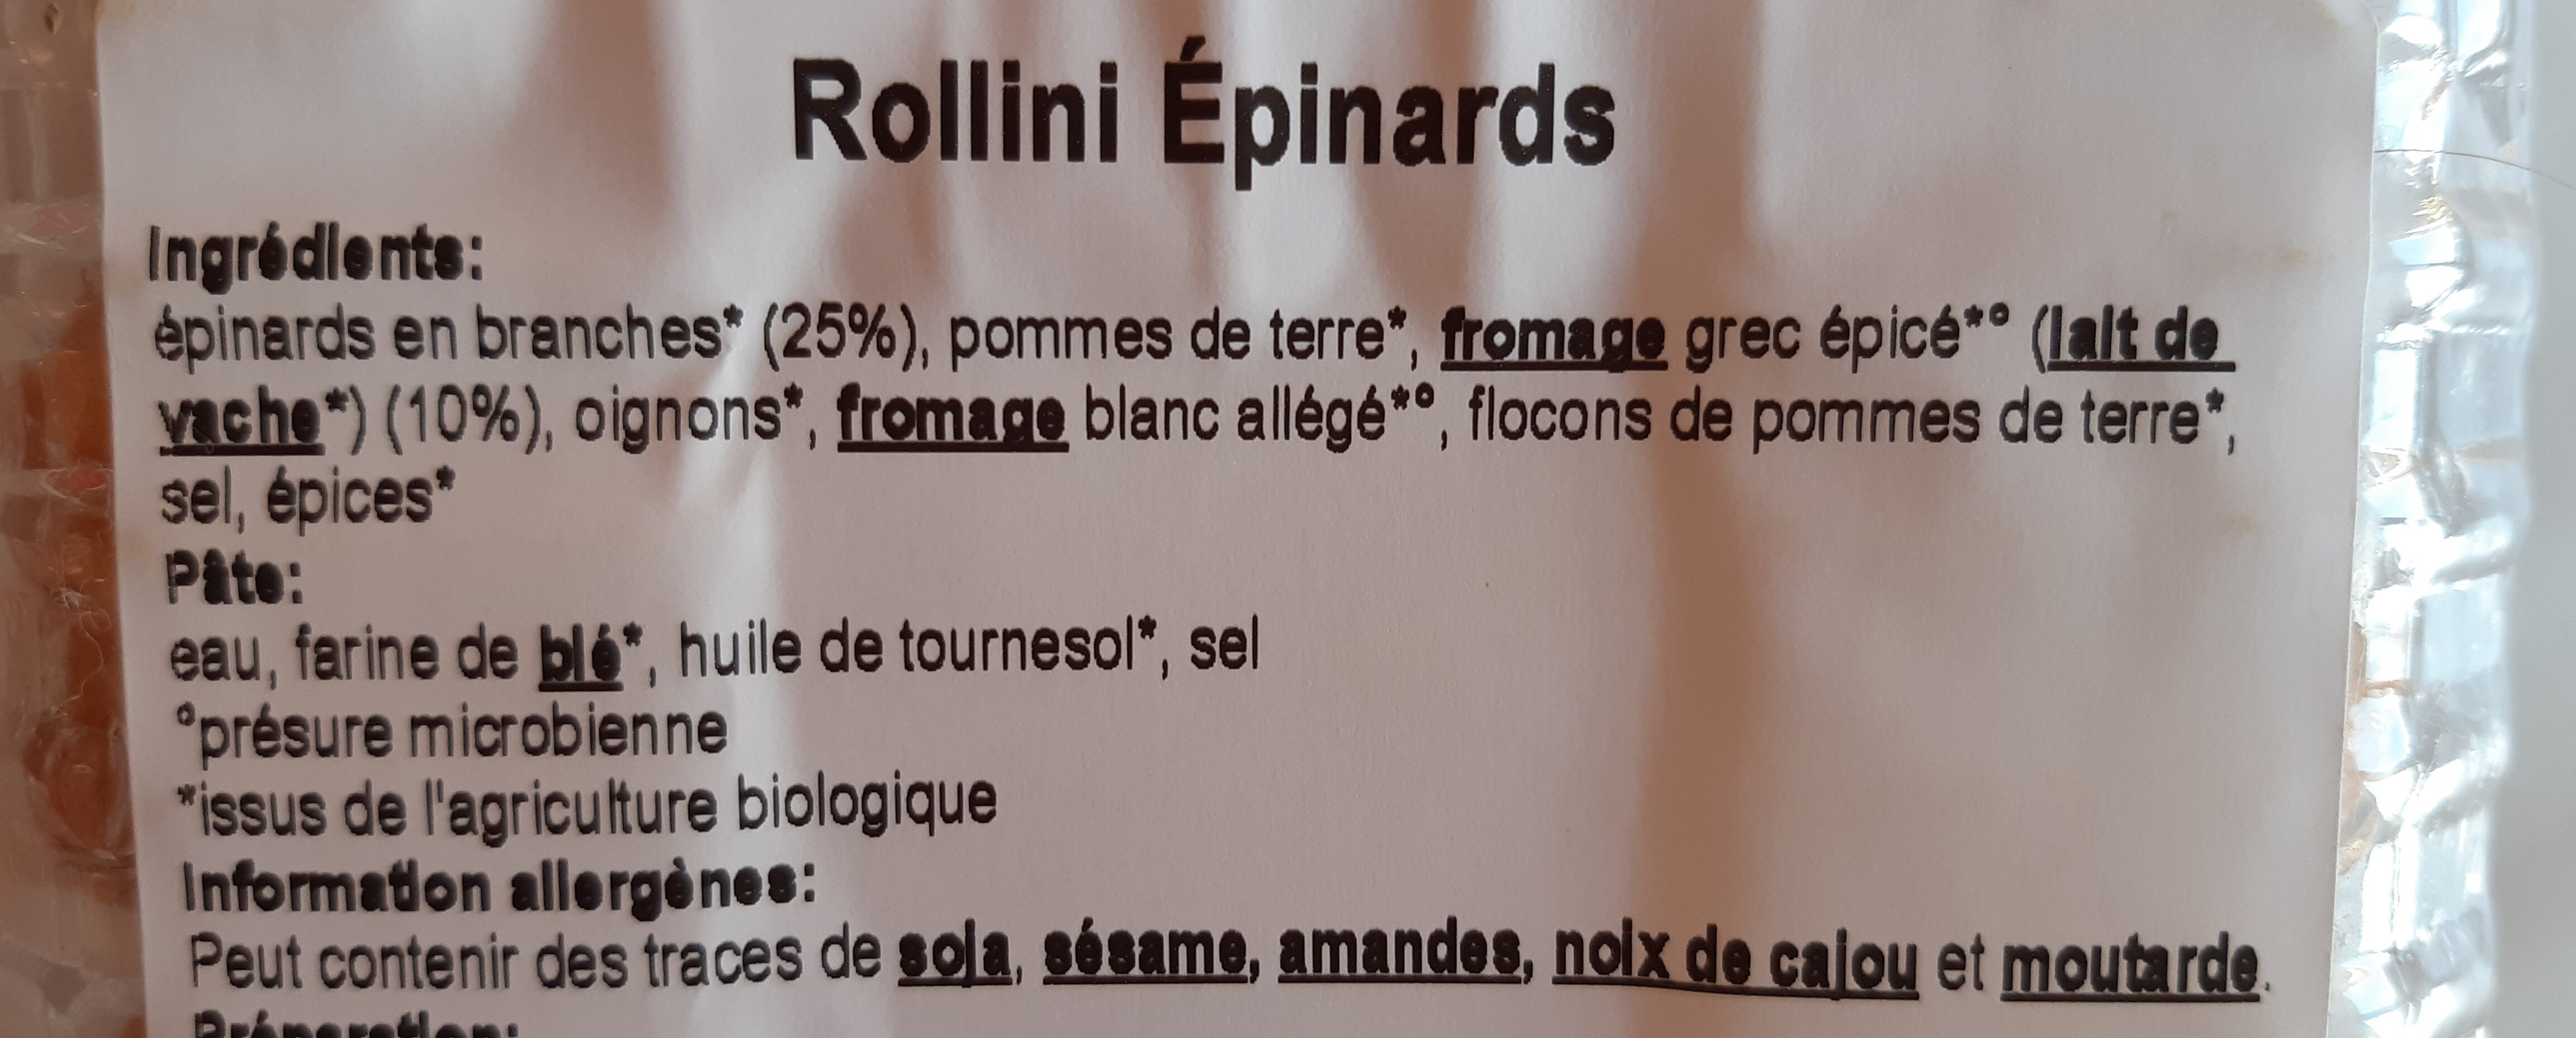 Rollini epinard - Ingredients - fr